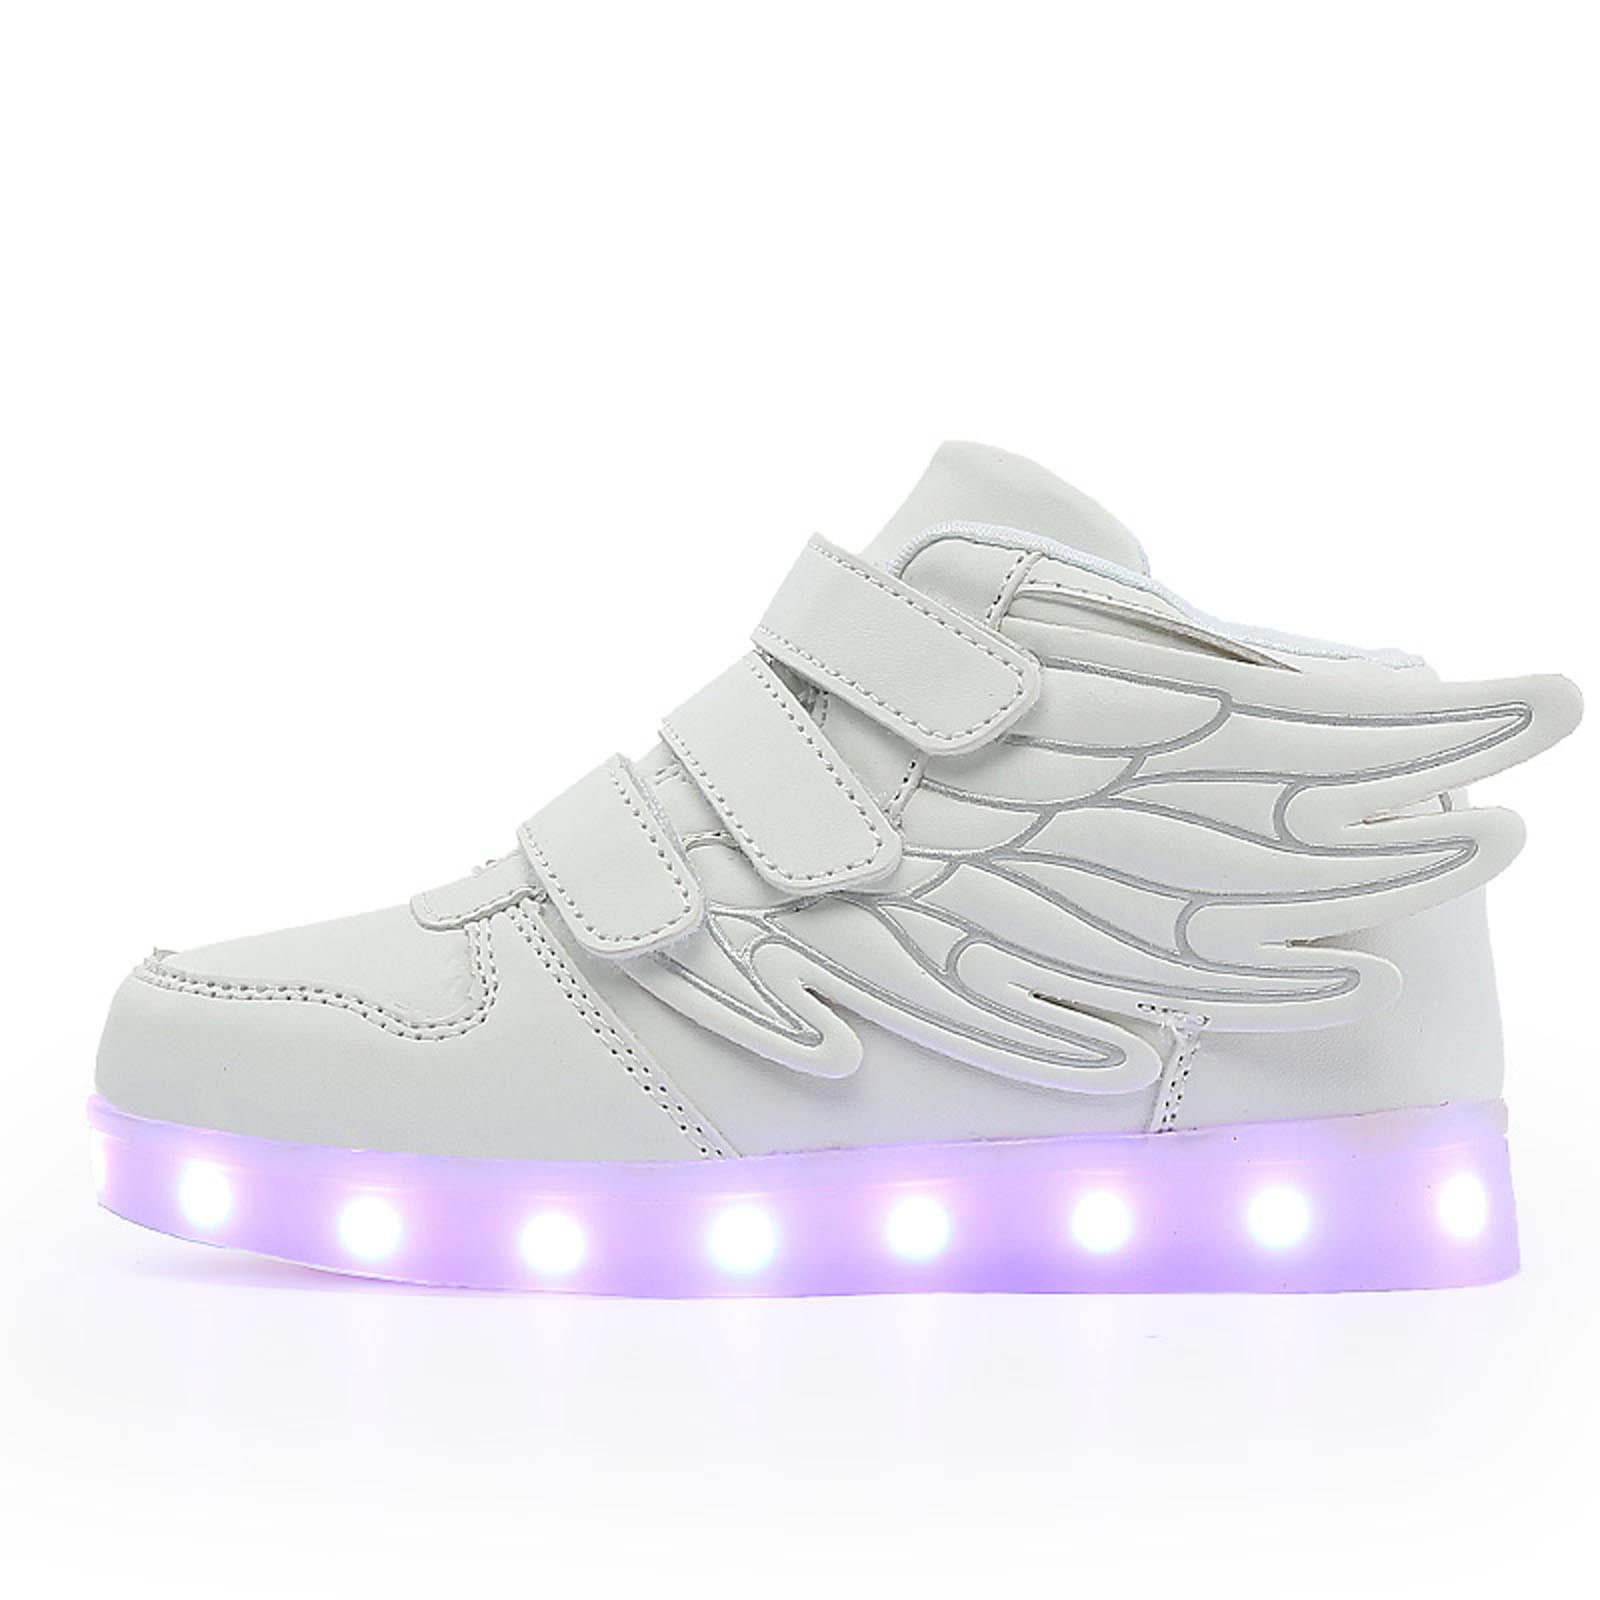 Details about   7 Color Led Luminous Sneakers USB Charging Kids Light Up Shoes Fashion Shoes 